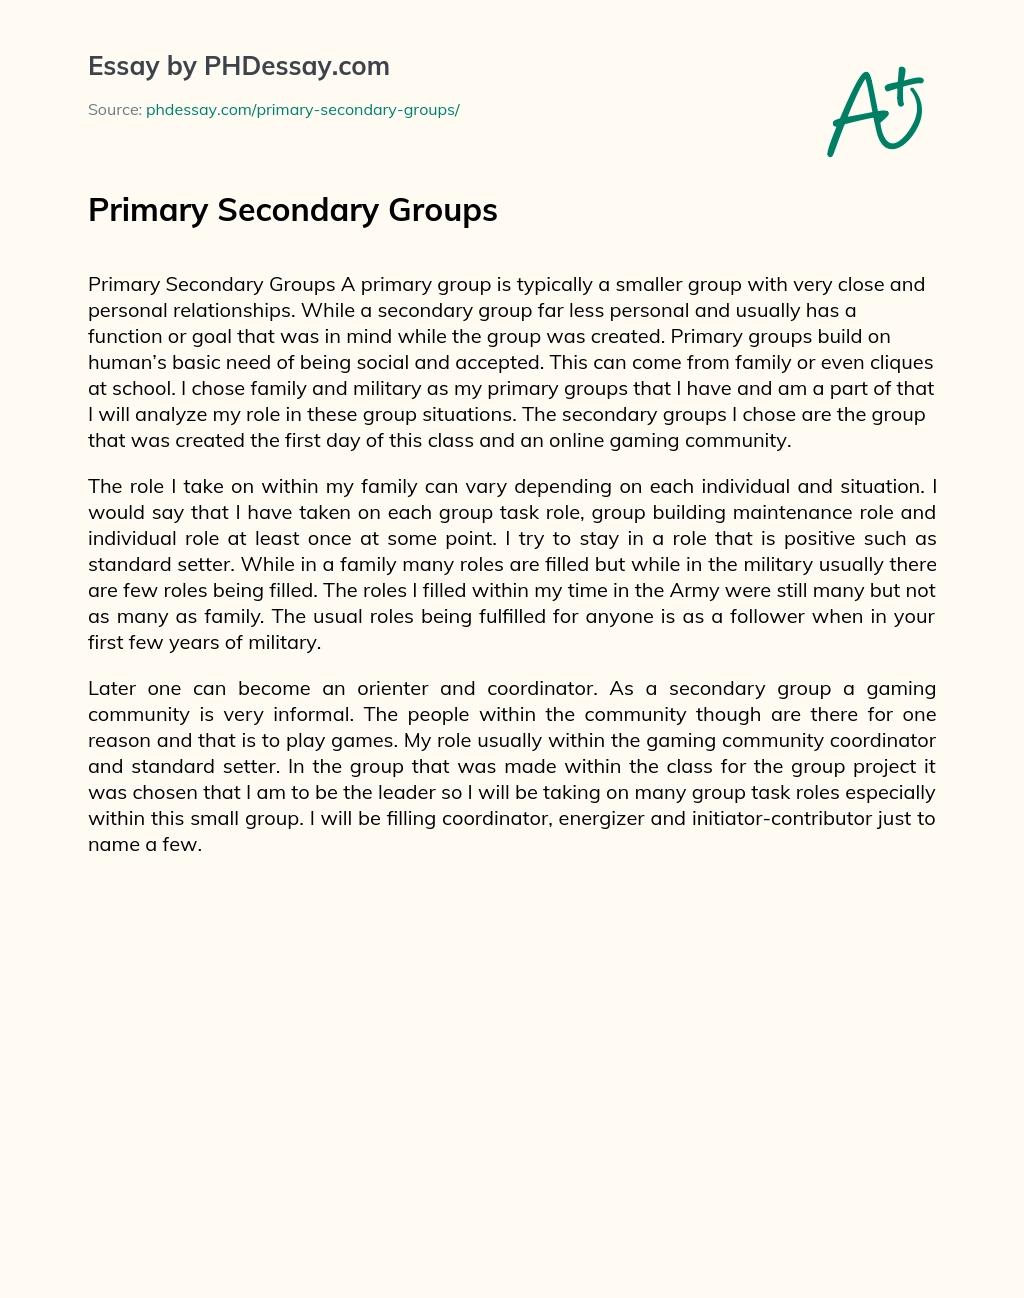 Primary Secondary Groups essay